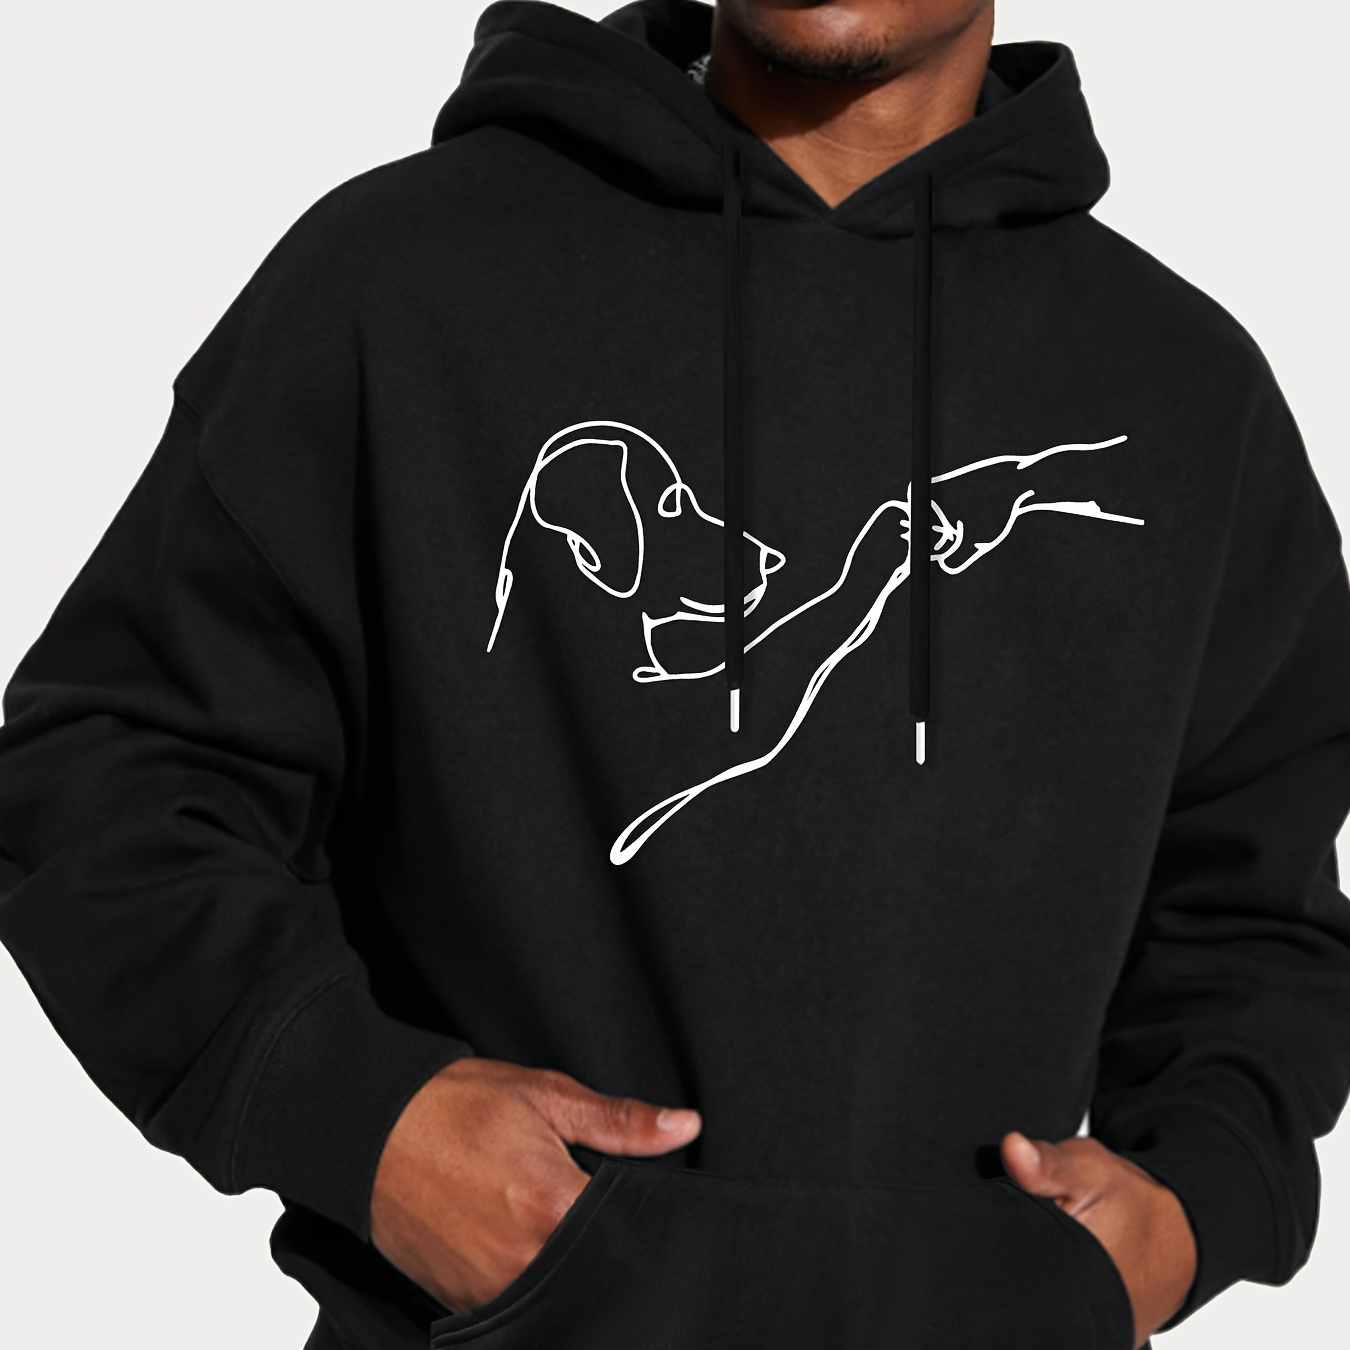 

Dog Print Kangaroo Pocket Hoodie, Casual Long Sleeve Hoodies Pullover Sweatshirt, Men's Clothing, For Fall Winter